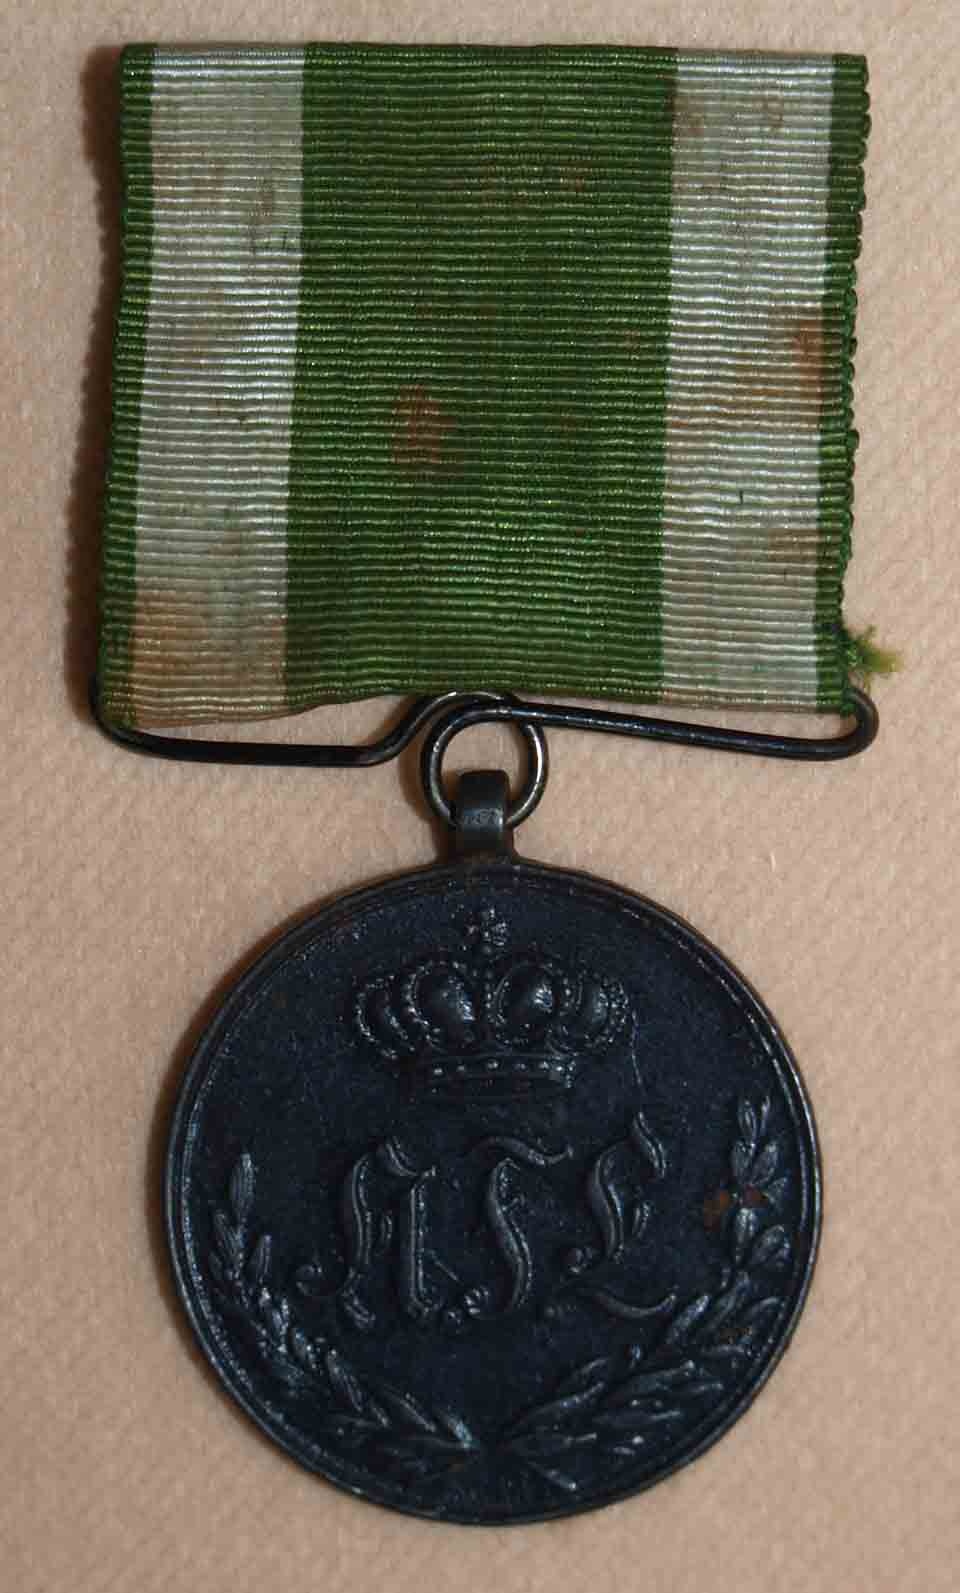 Kriegsdenkmünze oder Campagne-Medaille mit Band, Anhalt-Bernburg, 1814-1815 (Museum Weißenfels - Schloss Neu-Augustusburg CC BY-NC-SA)